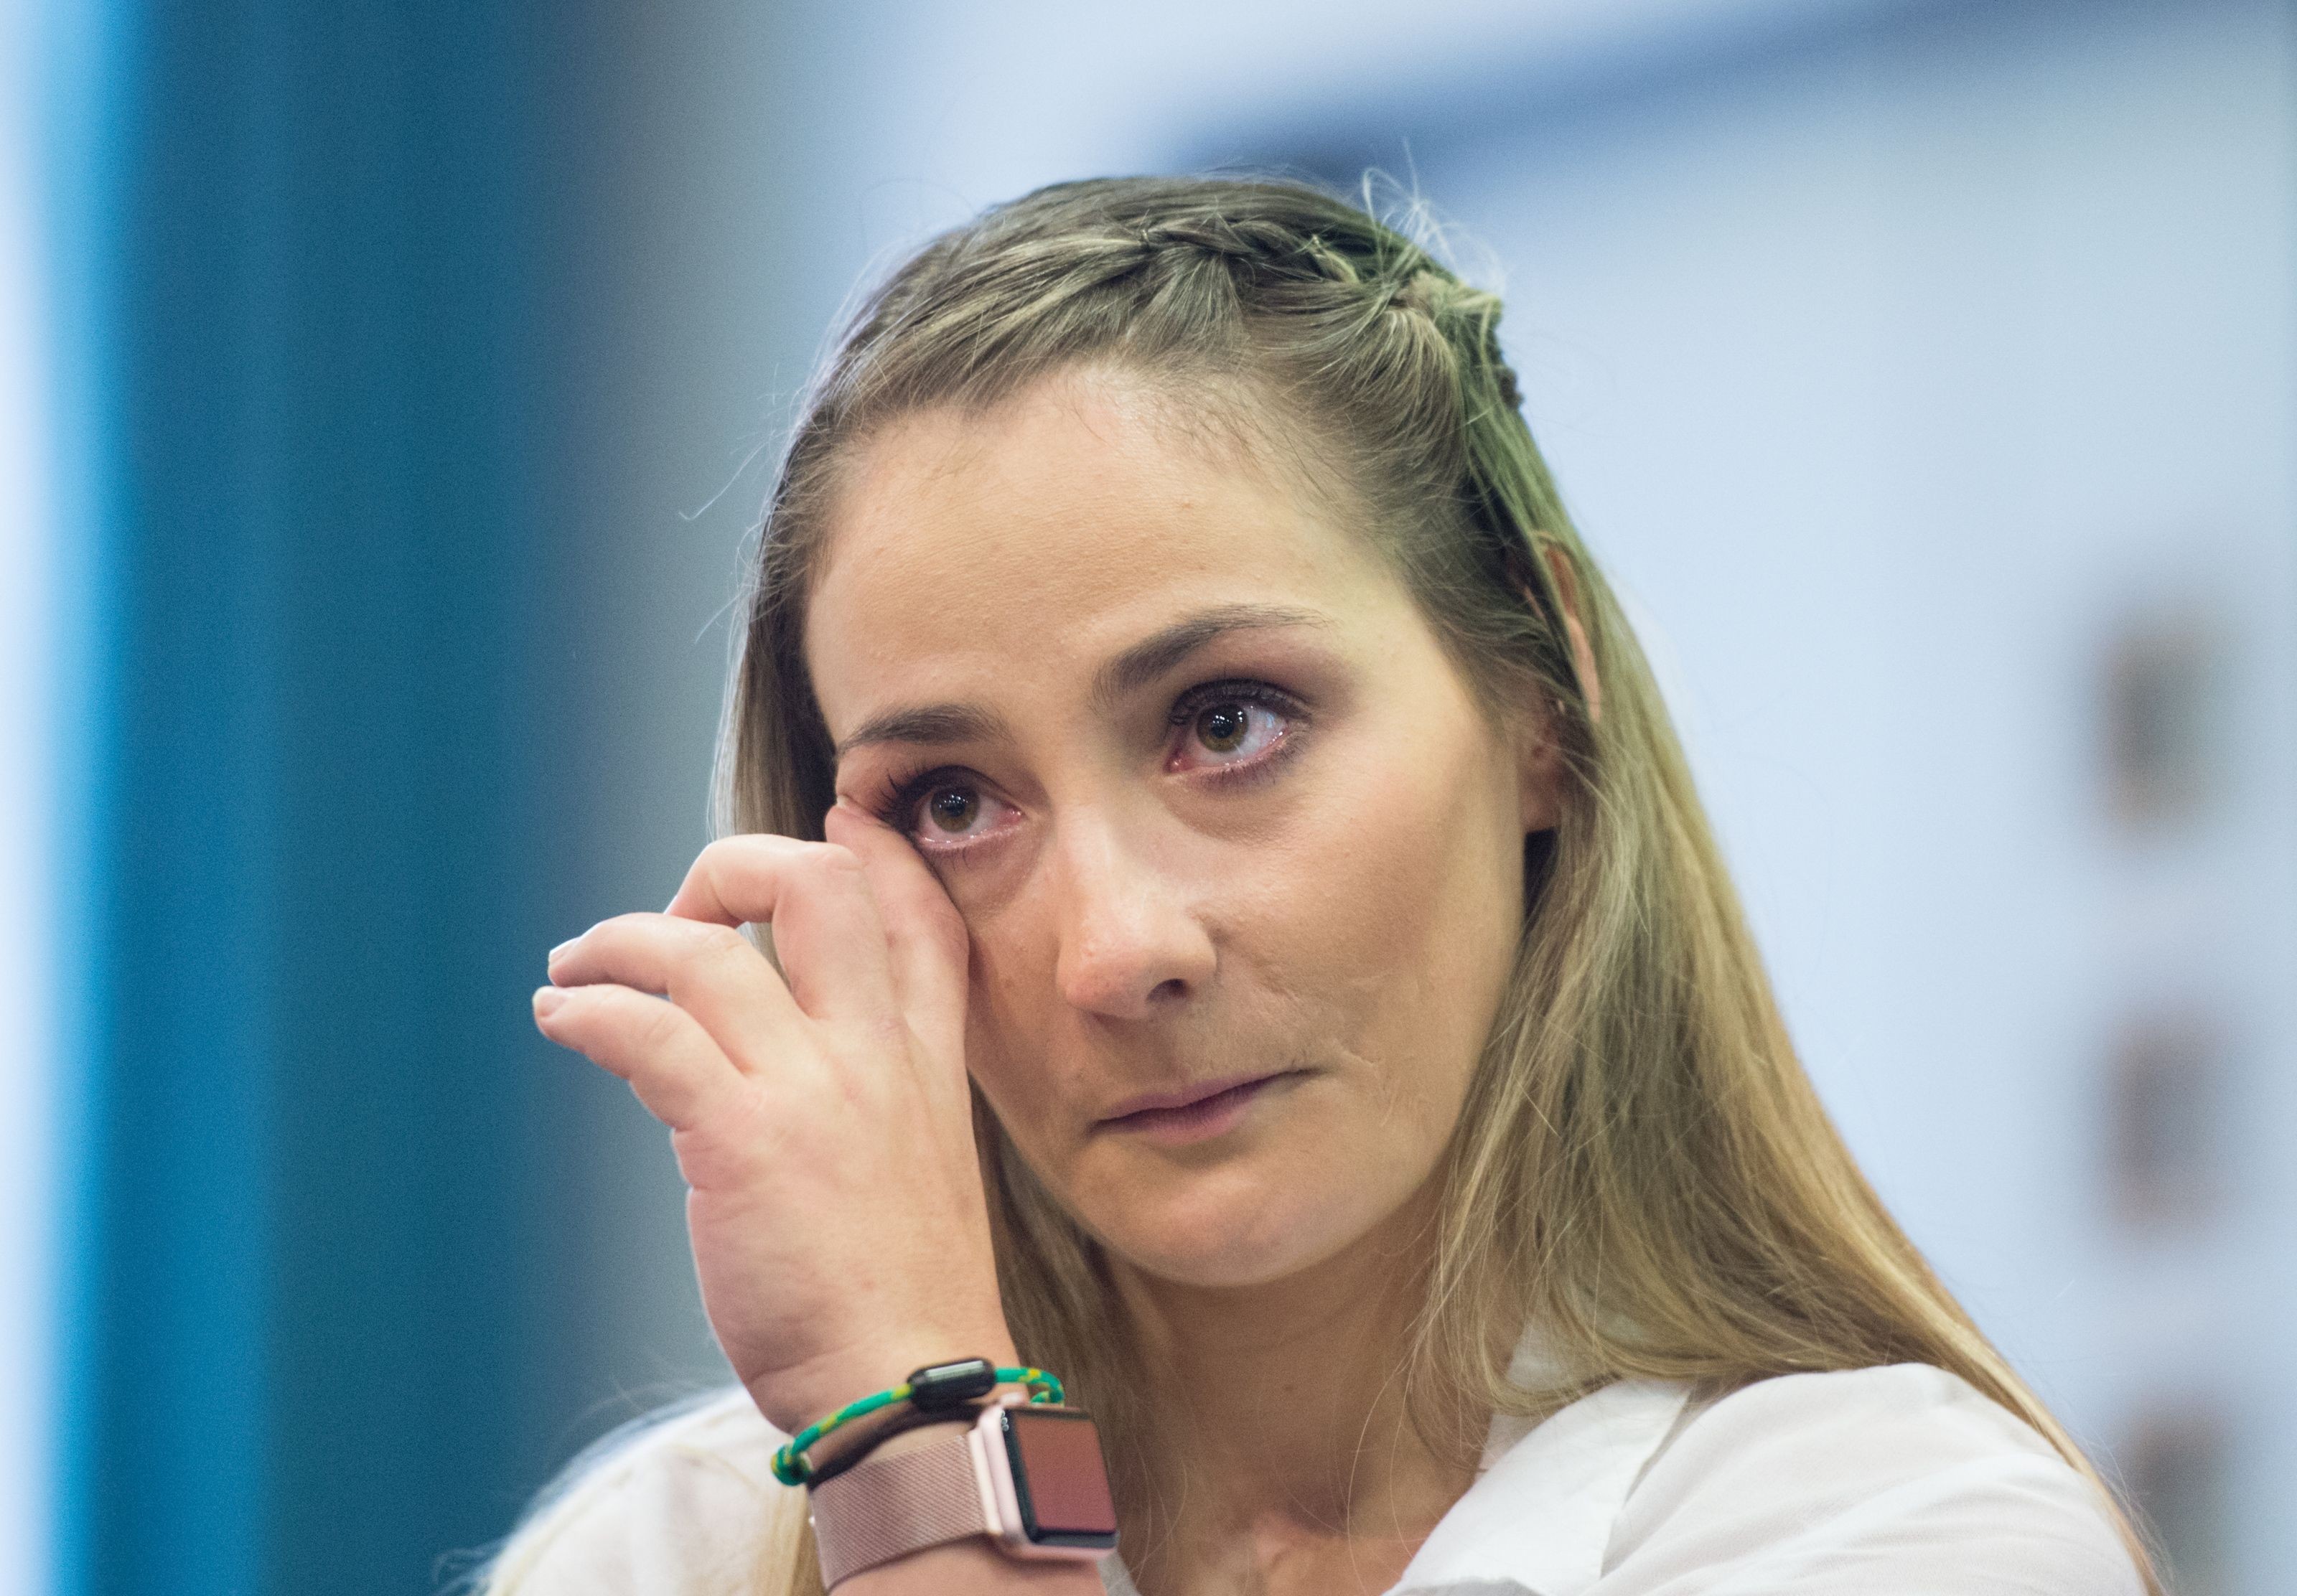 Kristina Vogel sheds a tear as she meets the press in a Berlin hospital. Photo: AFP